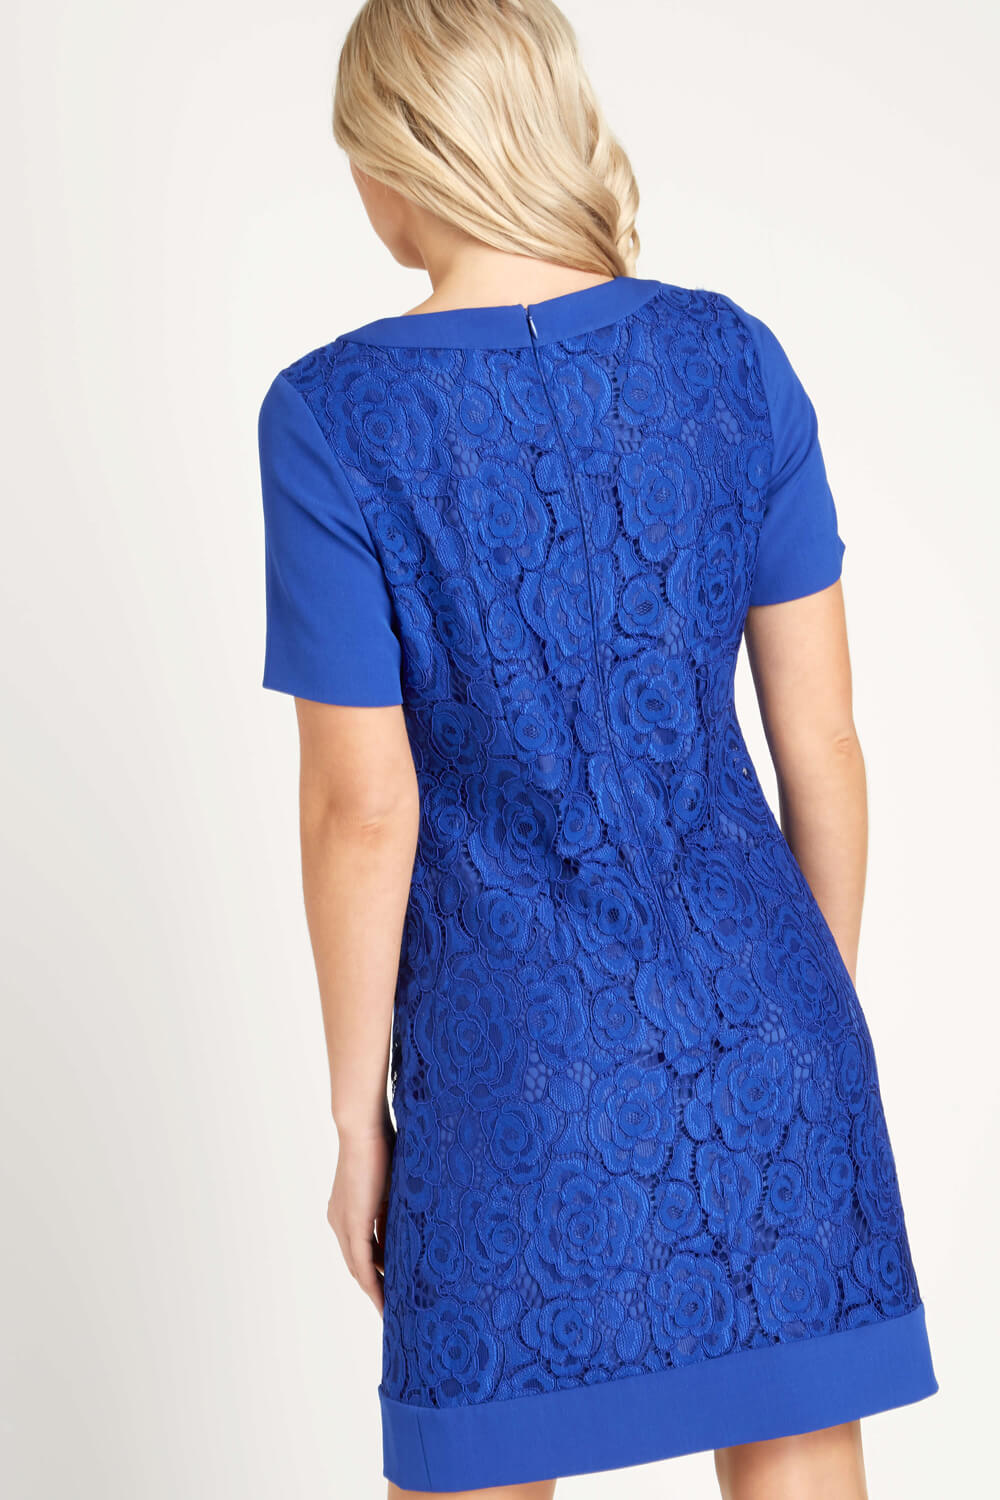 Lace Shift Dress in Royal Blue - Roman Originals UK